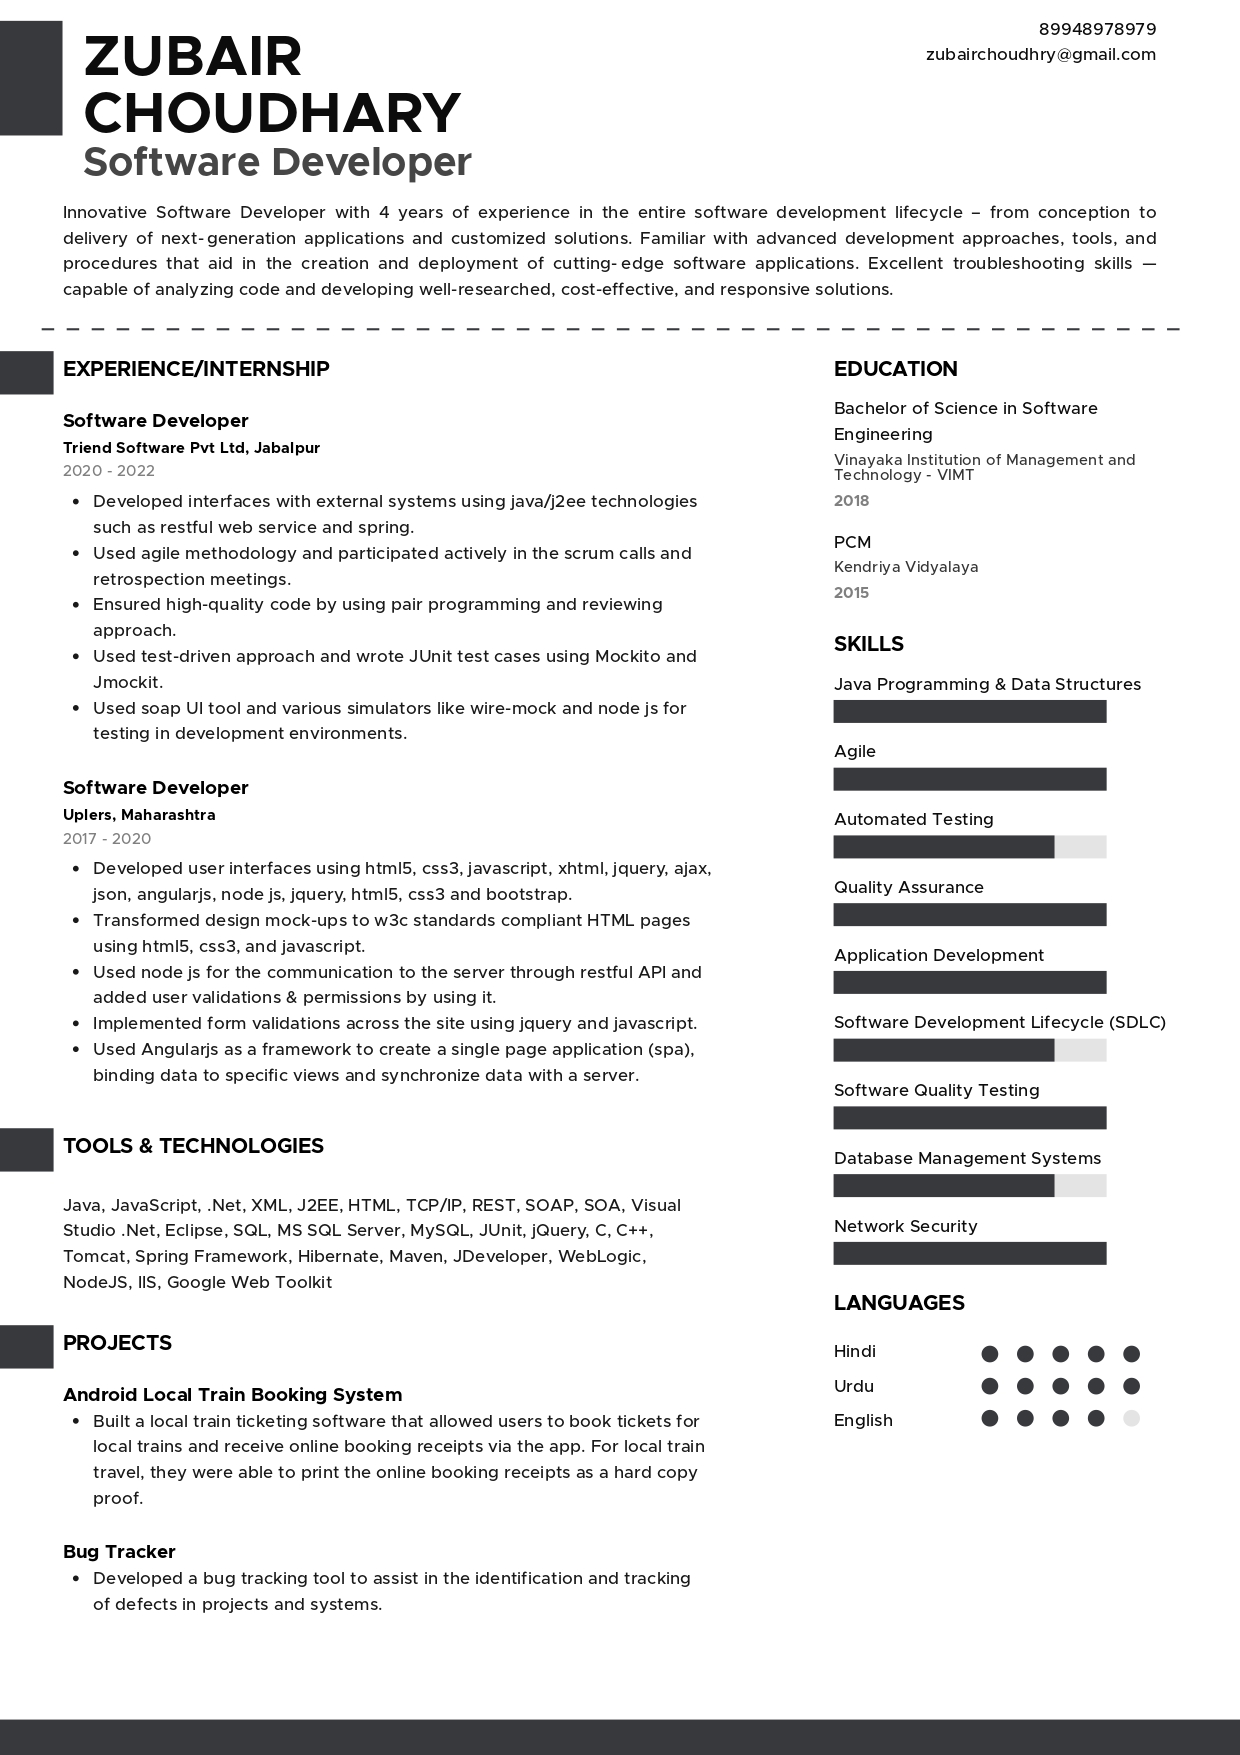 Resume of Software Developer